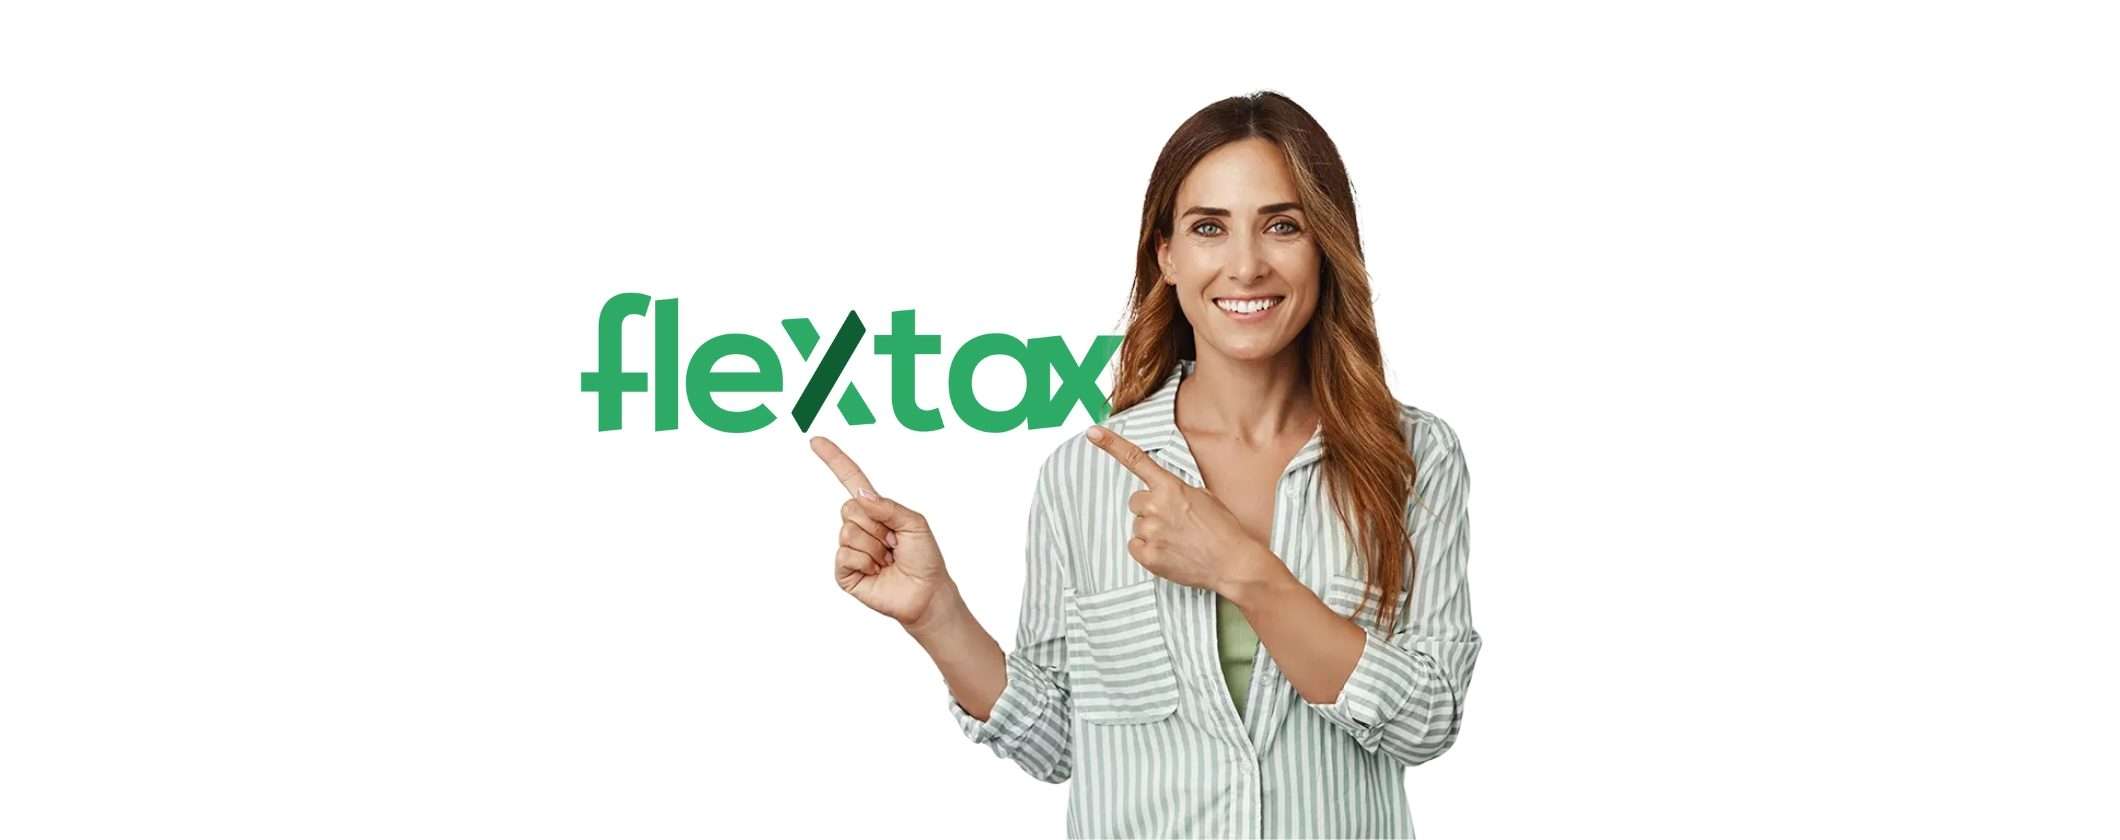 Flex Tax, assistenza fiscale gratuita per P.IVA